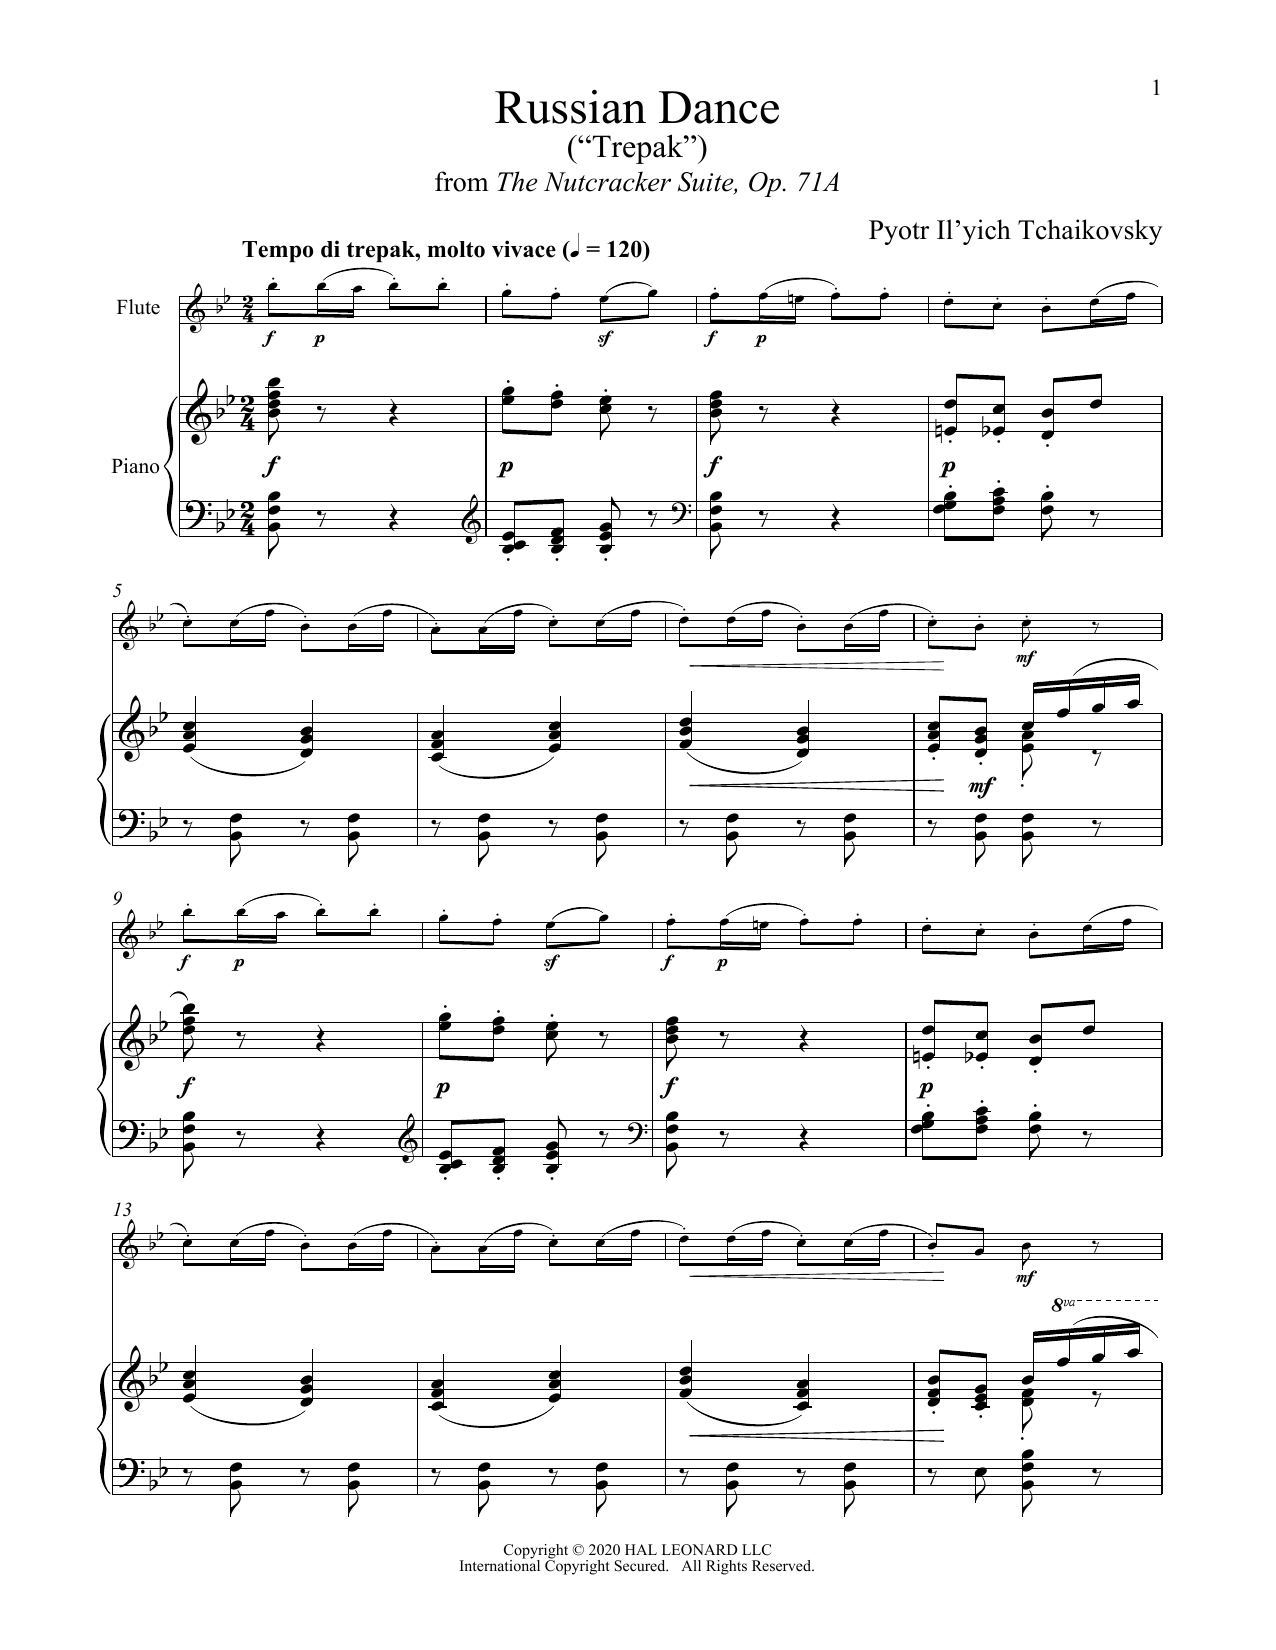 Download Pyotr Il'yich Tchaikovsky Trepak (from The Nutcracker) Sheet Music